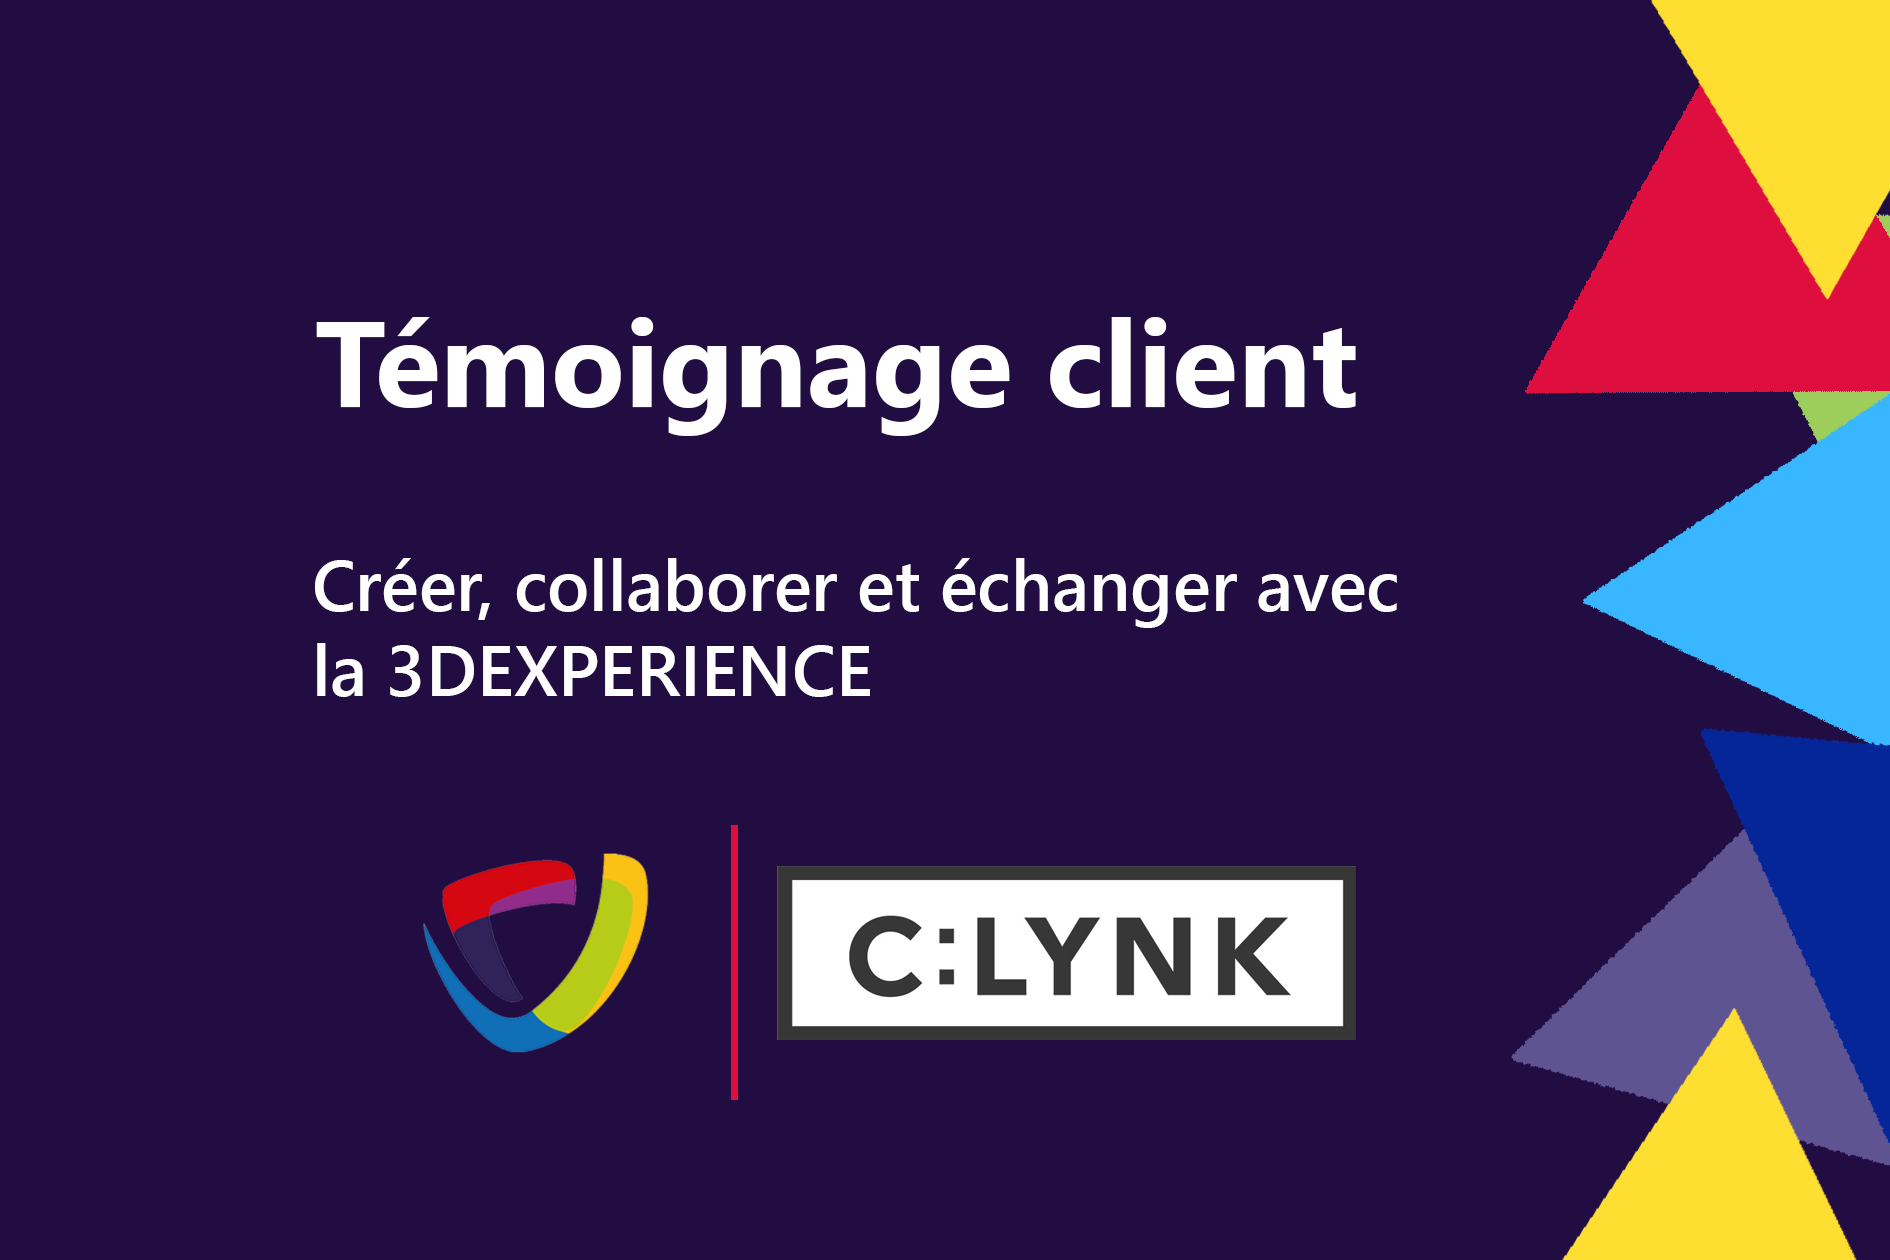 Témoignage client C Lynk